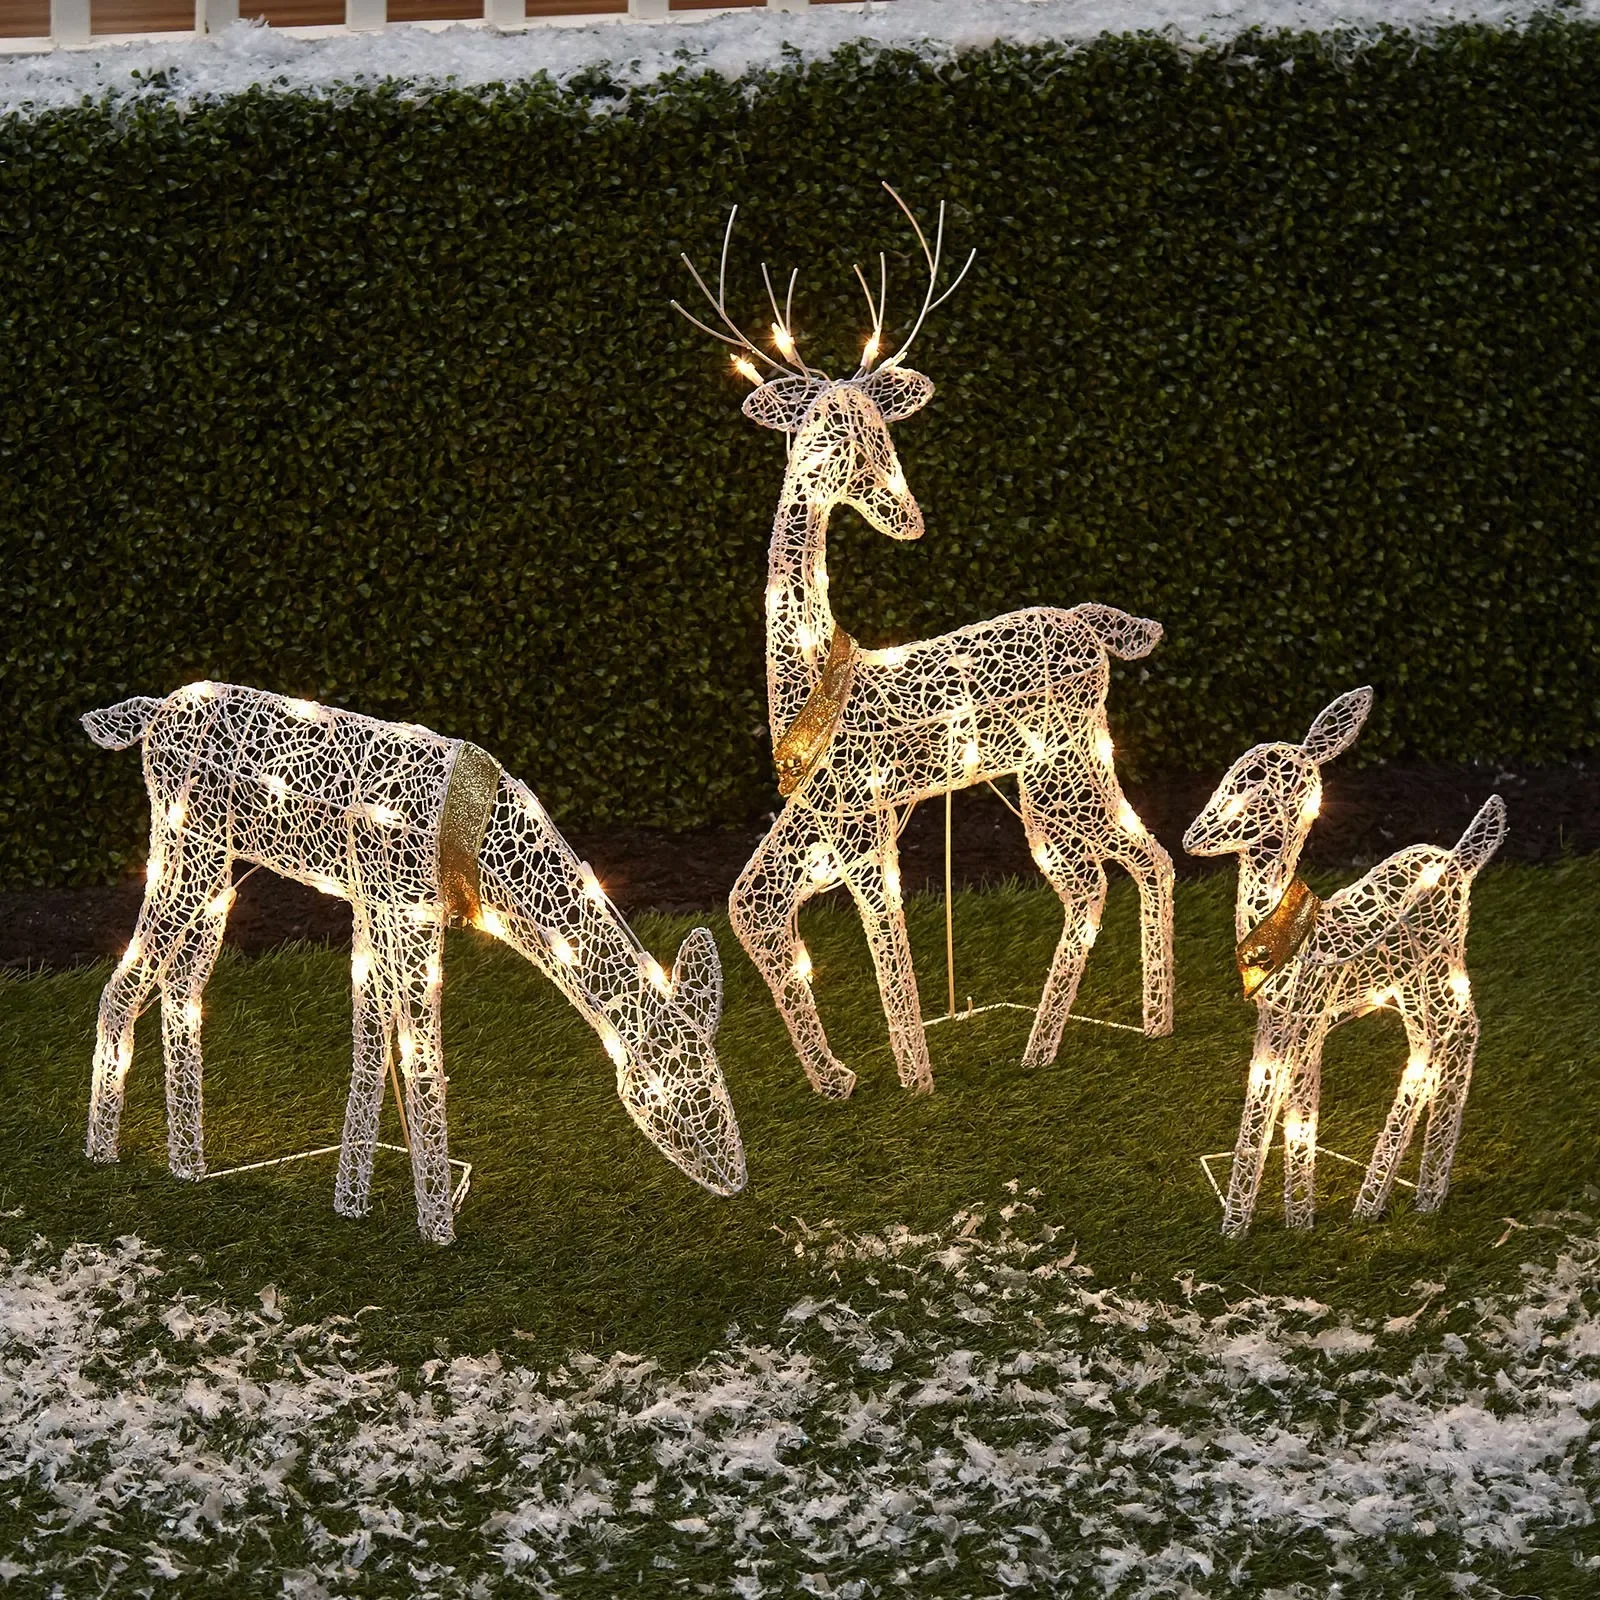 

3pc Christmas Iron Reindeer Elk Led Light Decoration Sculptures Garden Lawn Deer Lamp Shopping Mall Ornaments Home Decor